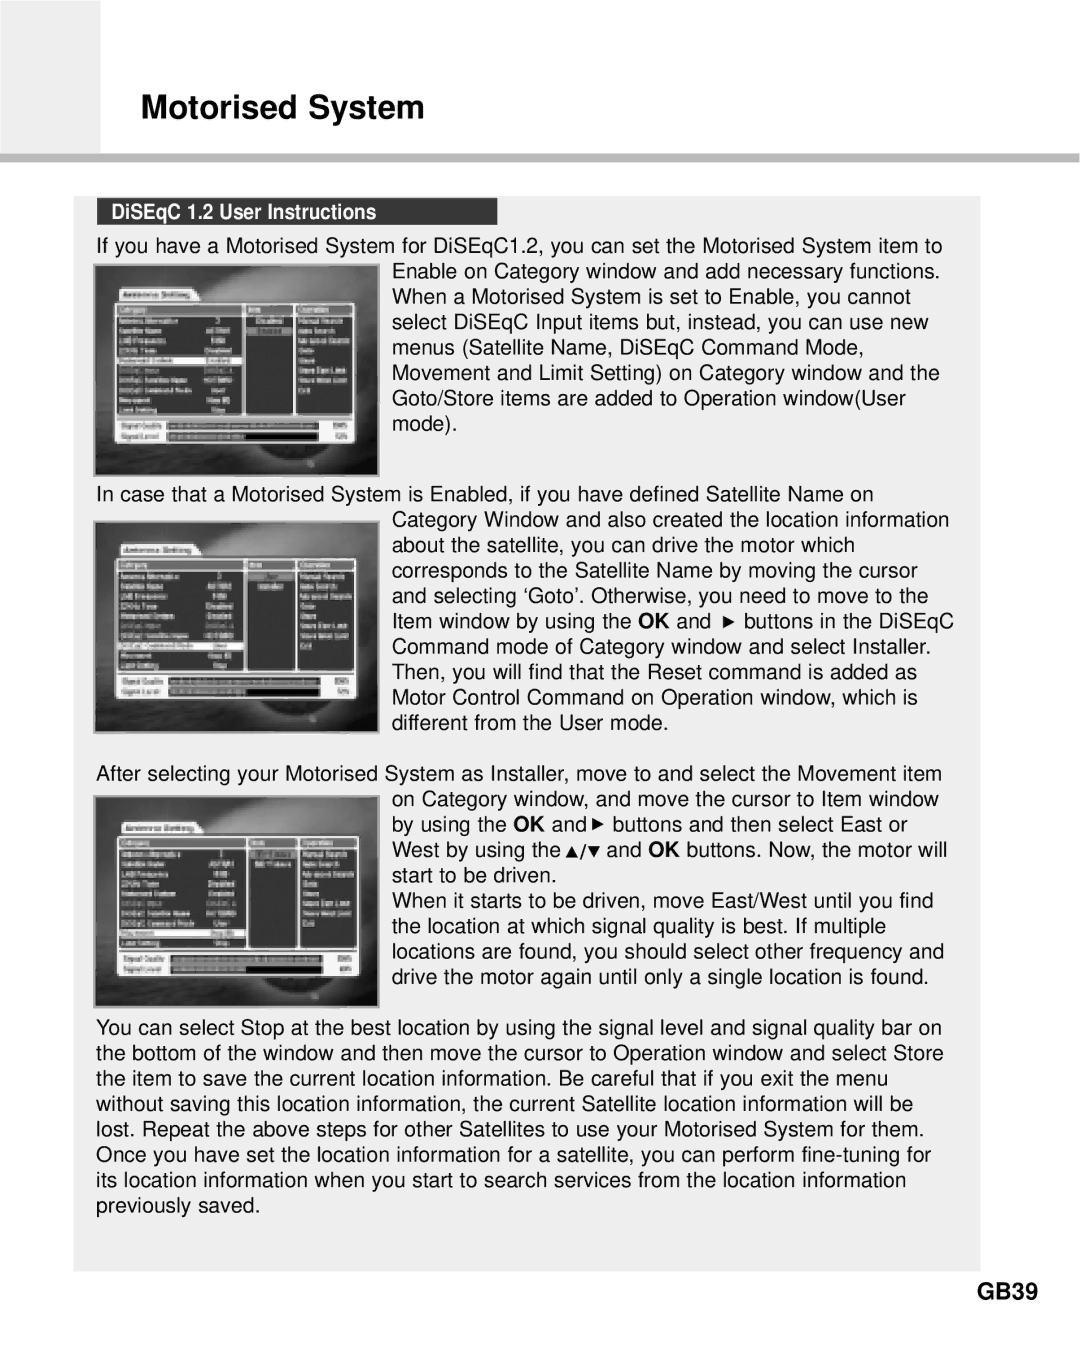 Humax F2-Green manual Motorised System, GB39, DiSEqC 1.2 User Instructions 